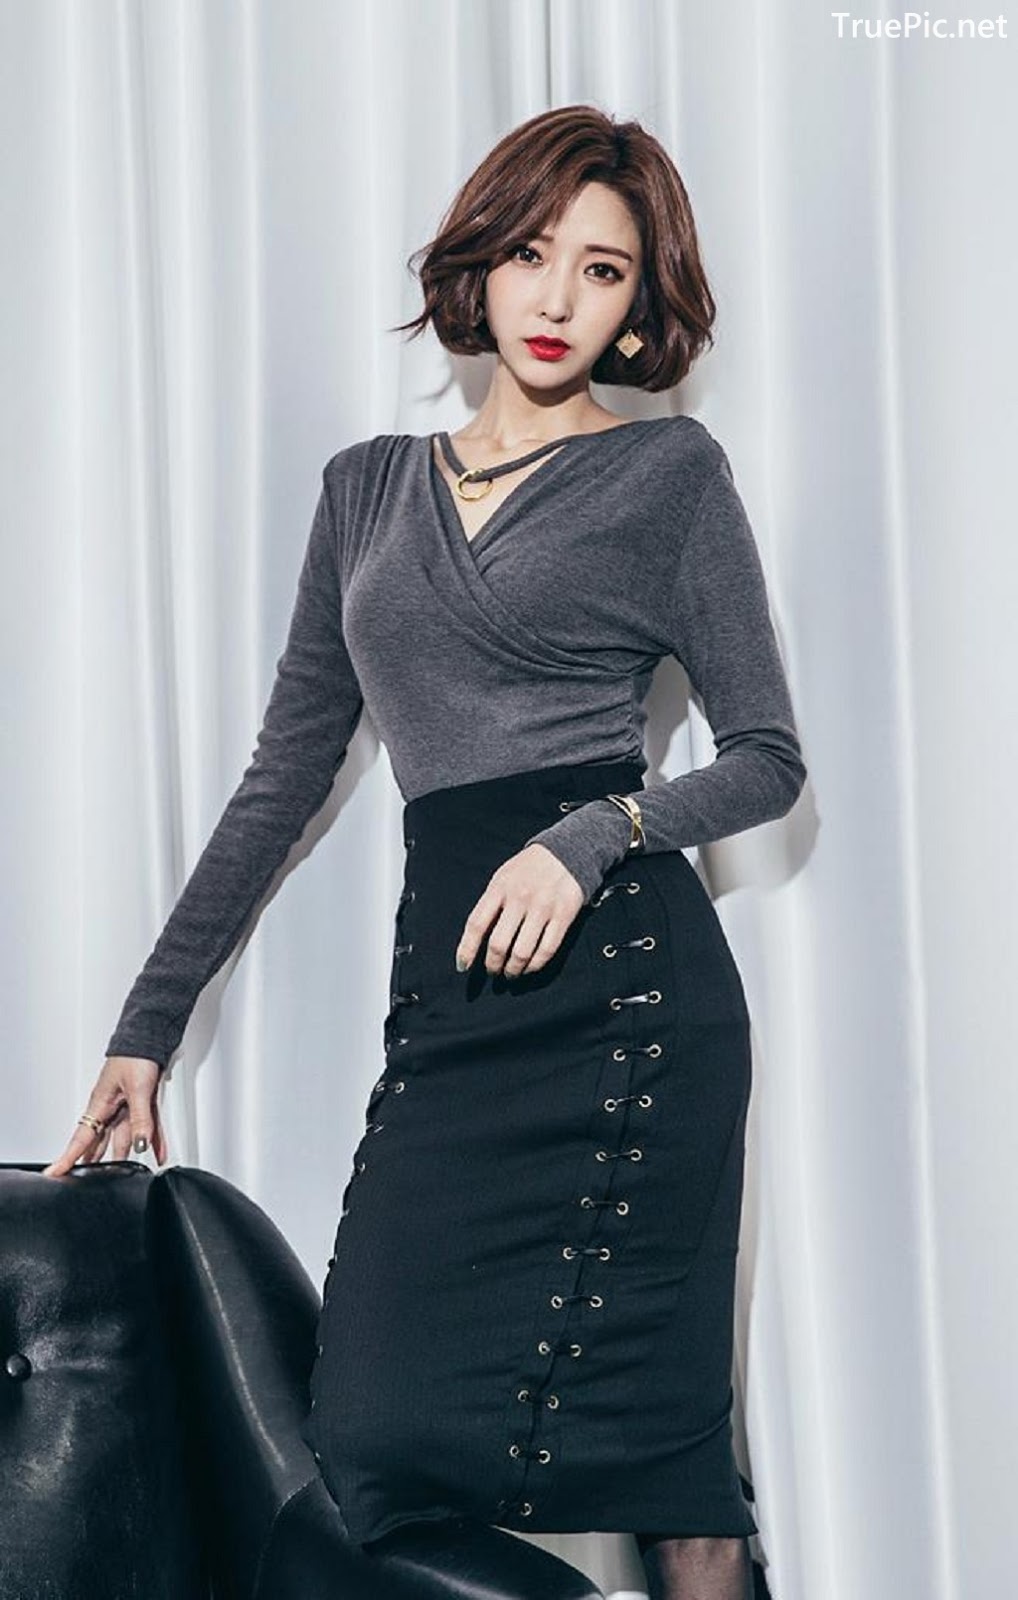 Image Ye Jin - Korean Fashion Model - Studio Photoshoot Collection - TruePic.net - Picture-71